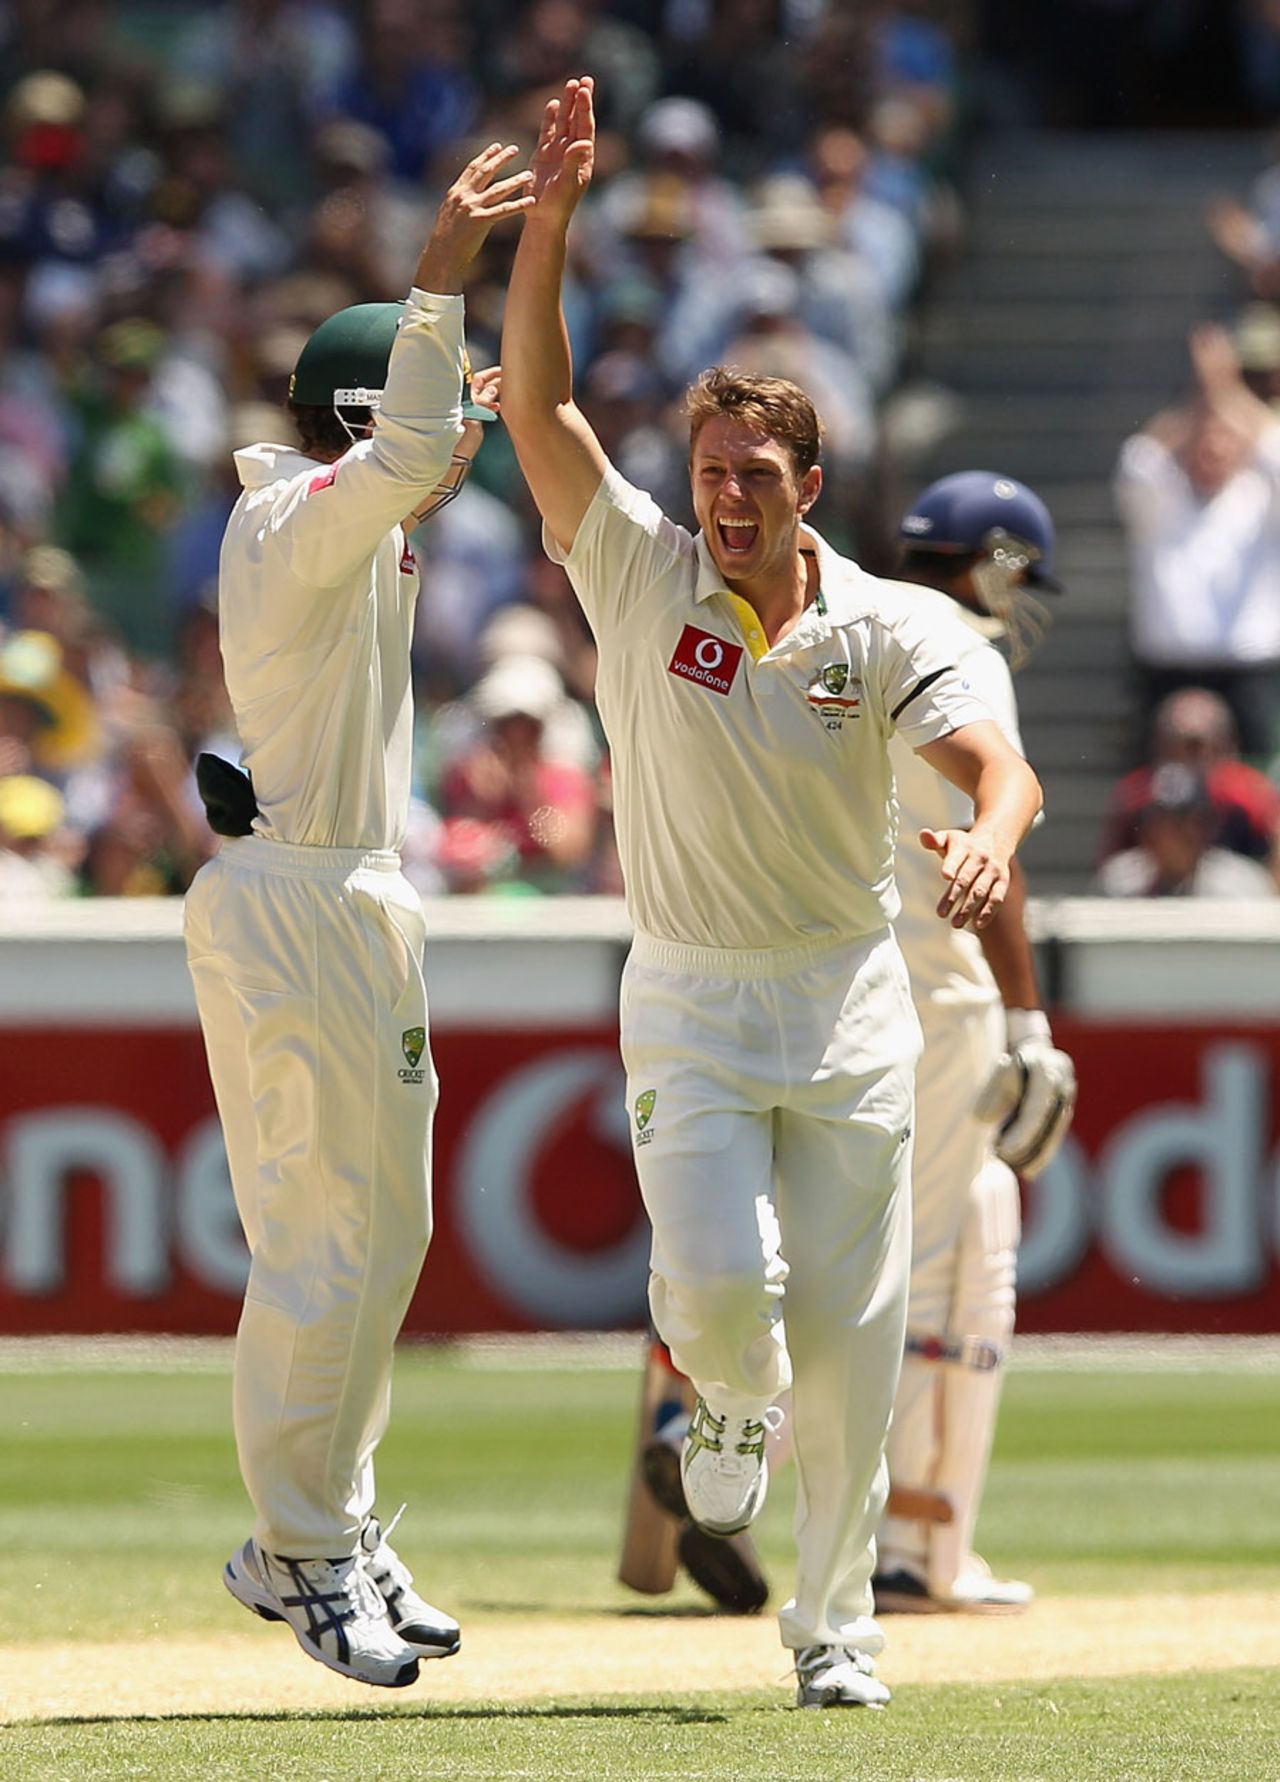 James Pattinson got the wicket of Zaheer Khan, Australia v India, 1st Test, Melbourne, 3rd day, December 28, 2011